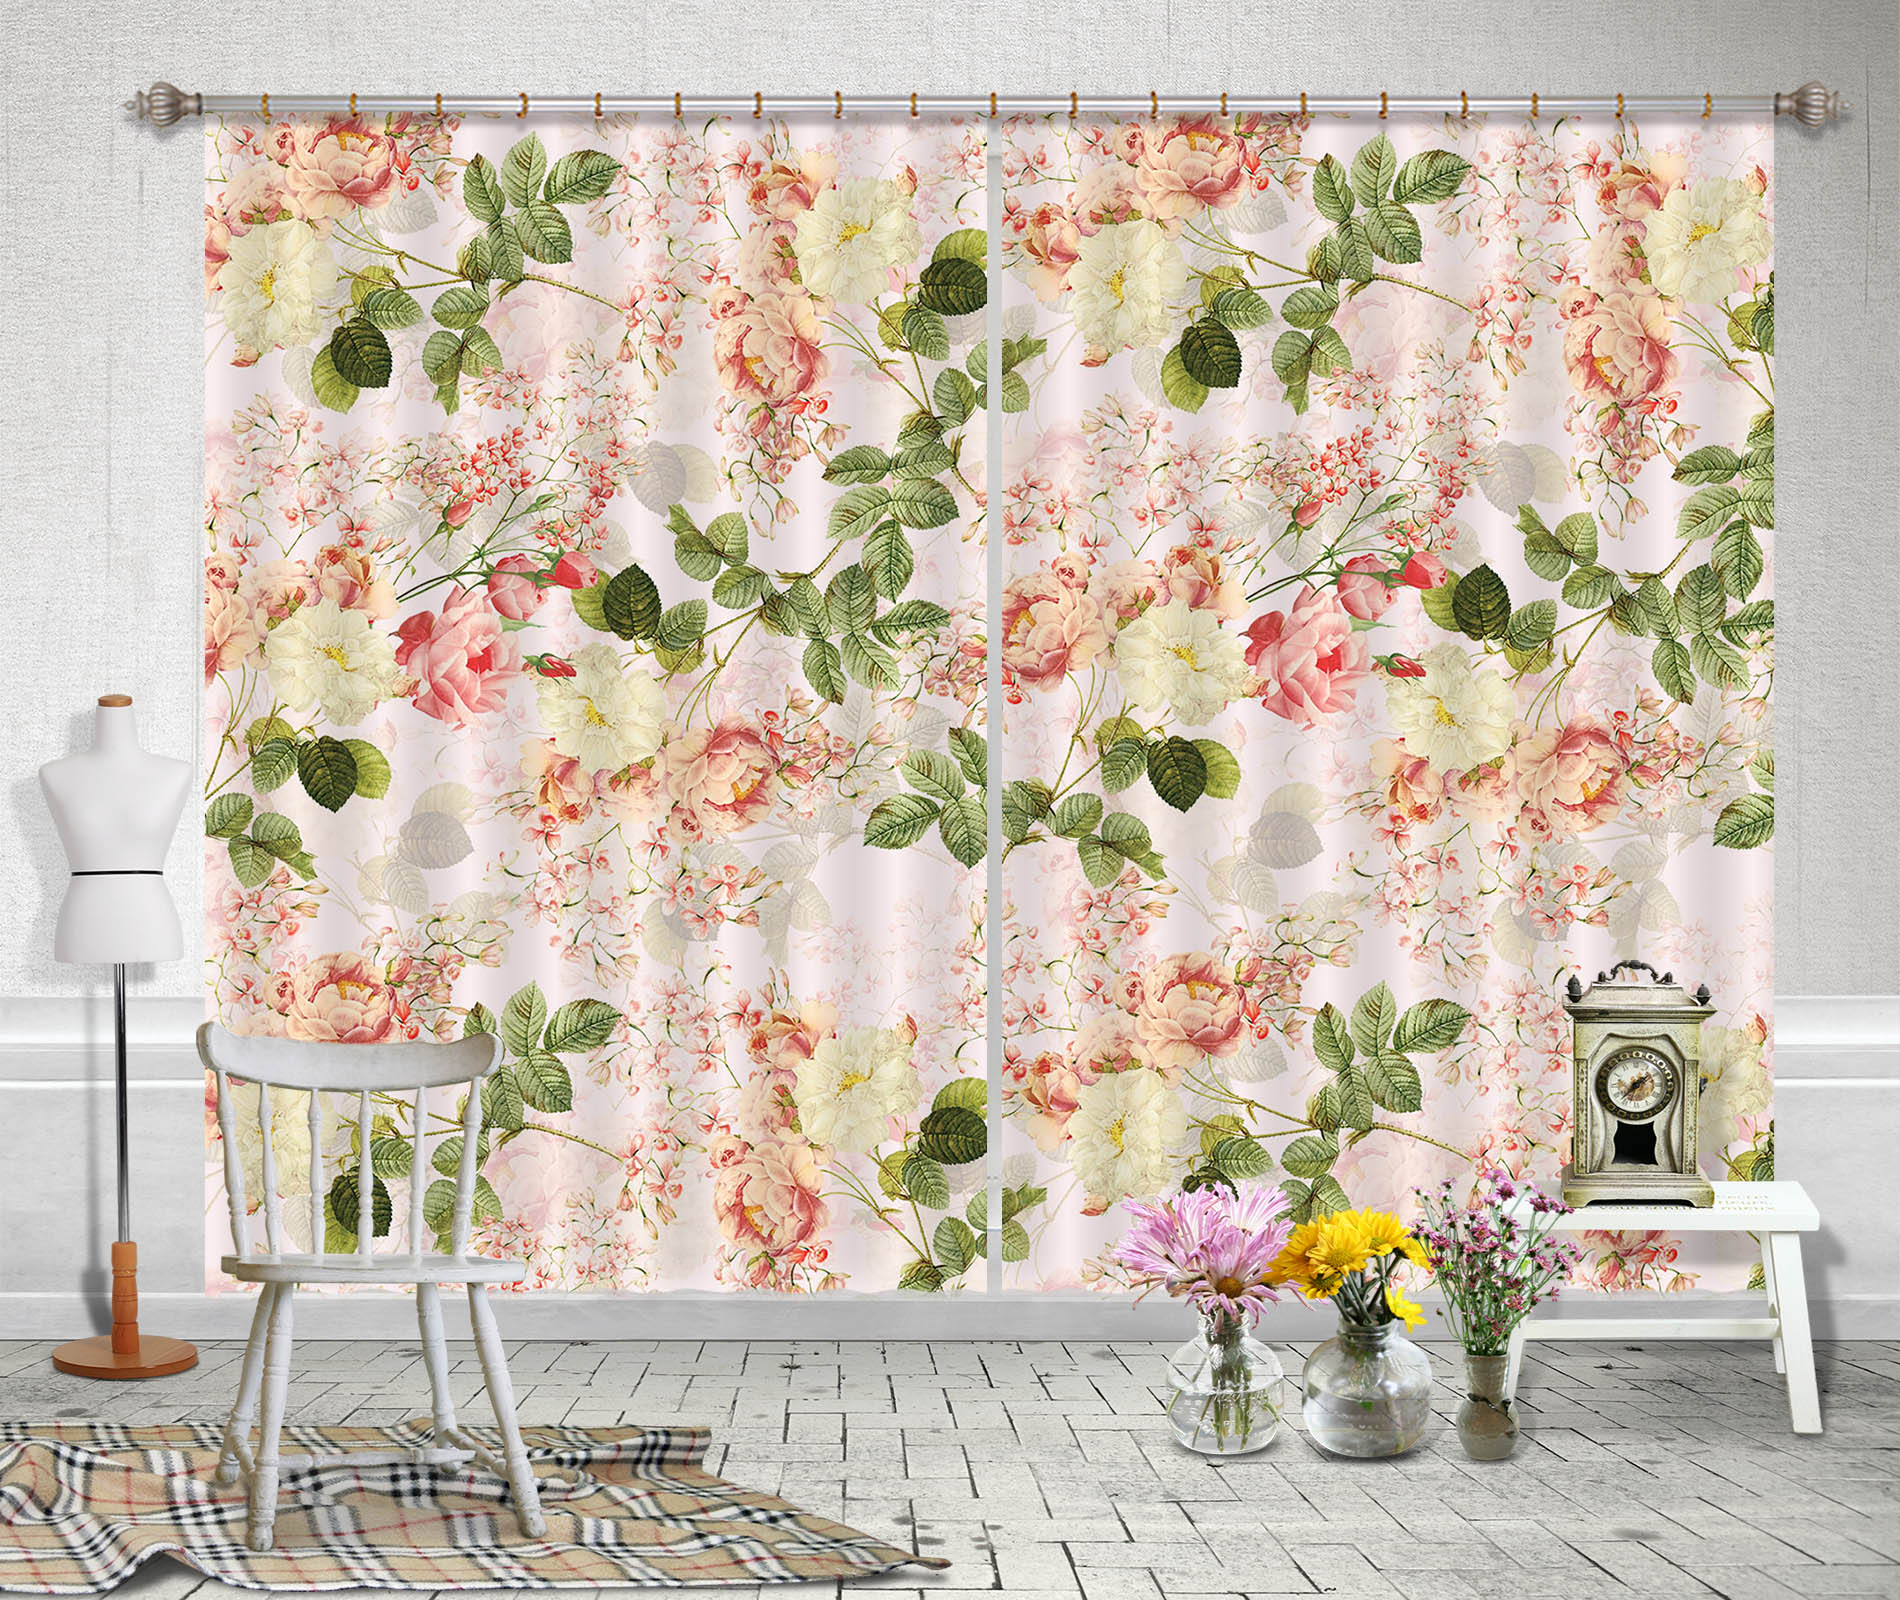 3D Pink Garden 130 Uta Naumann Curtain Curtains Drapes